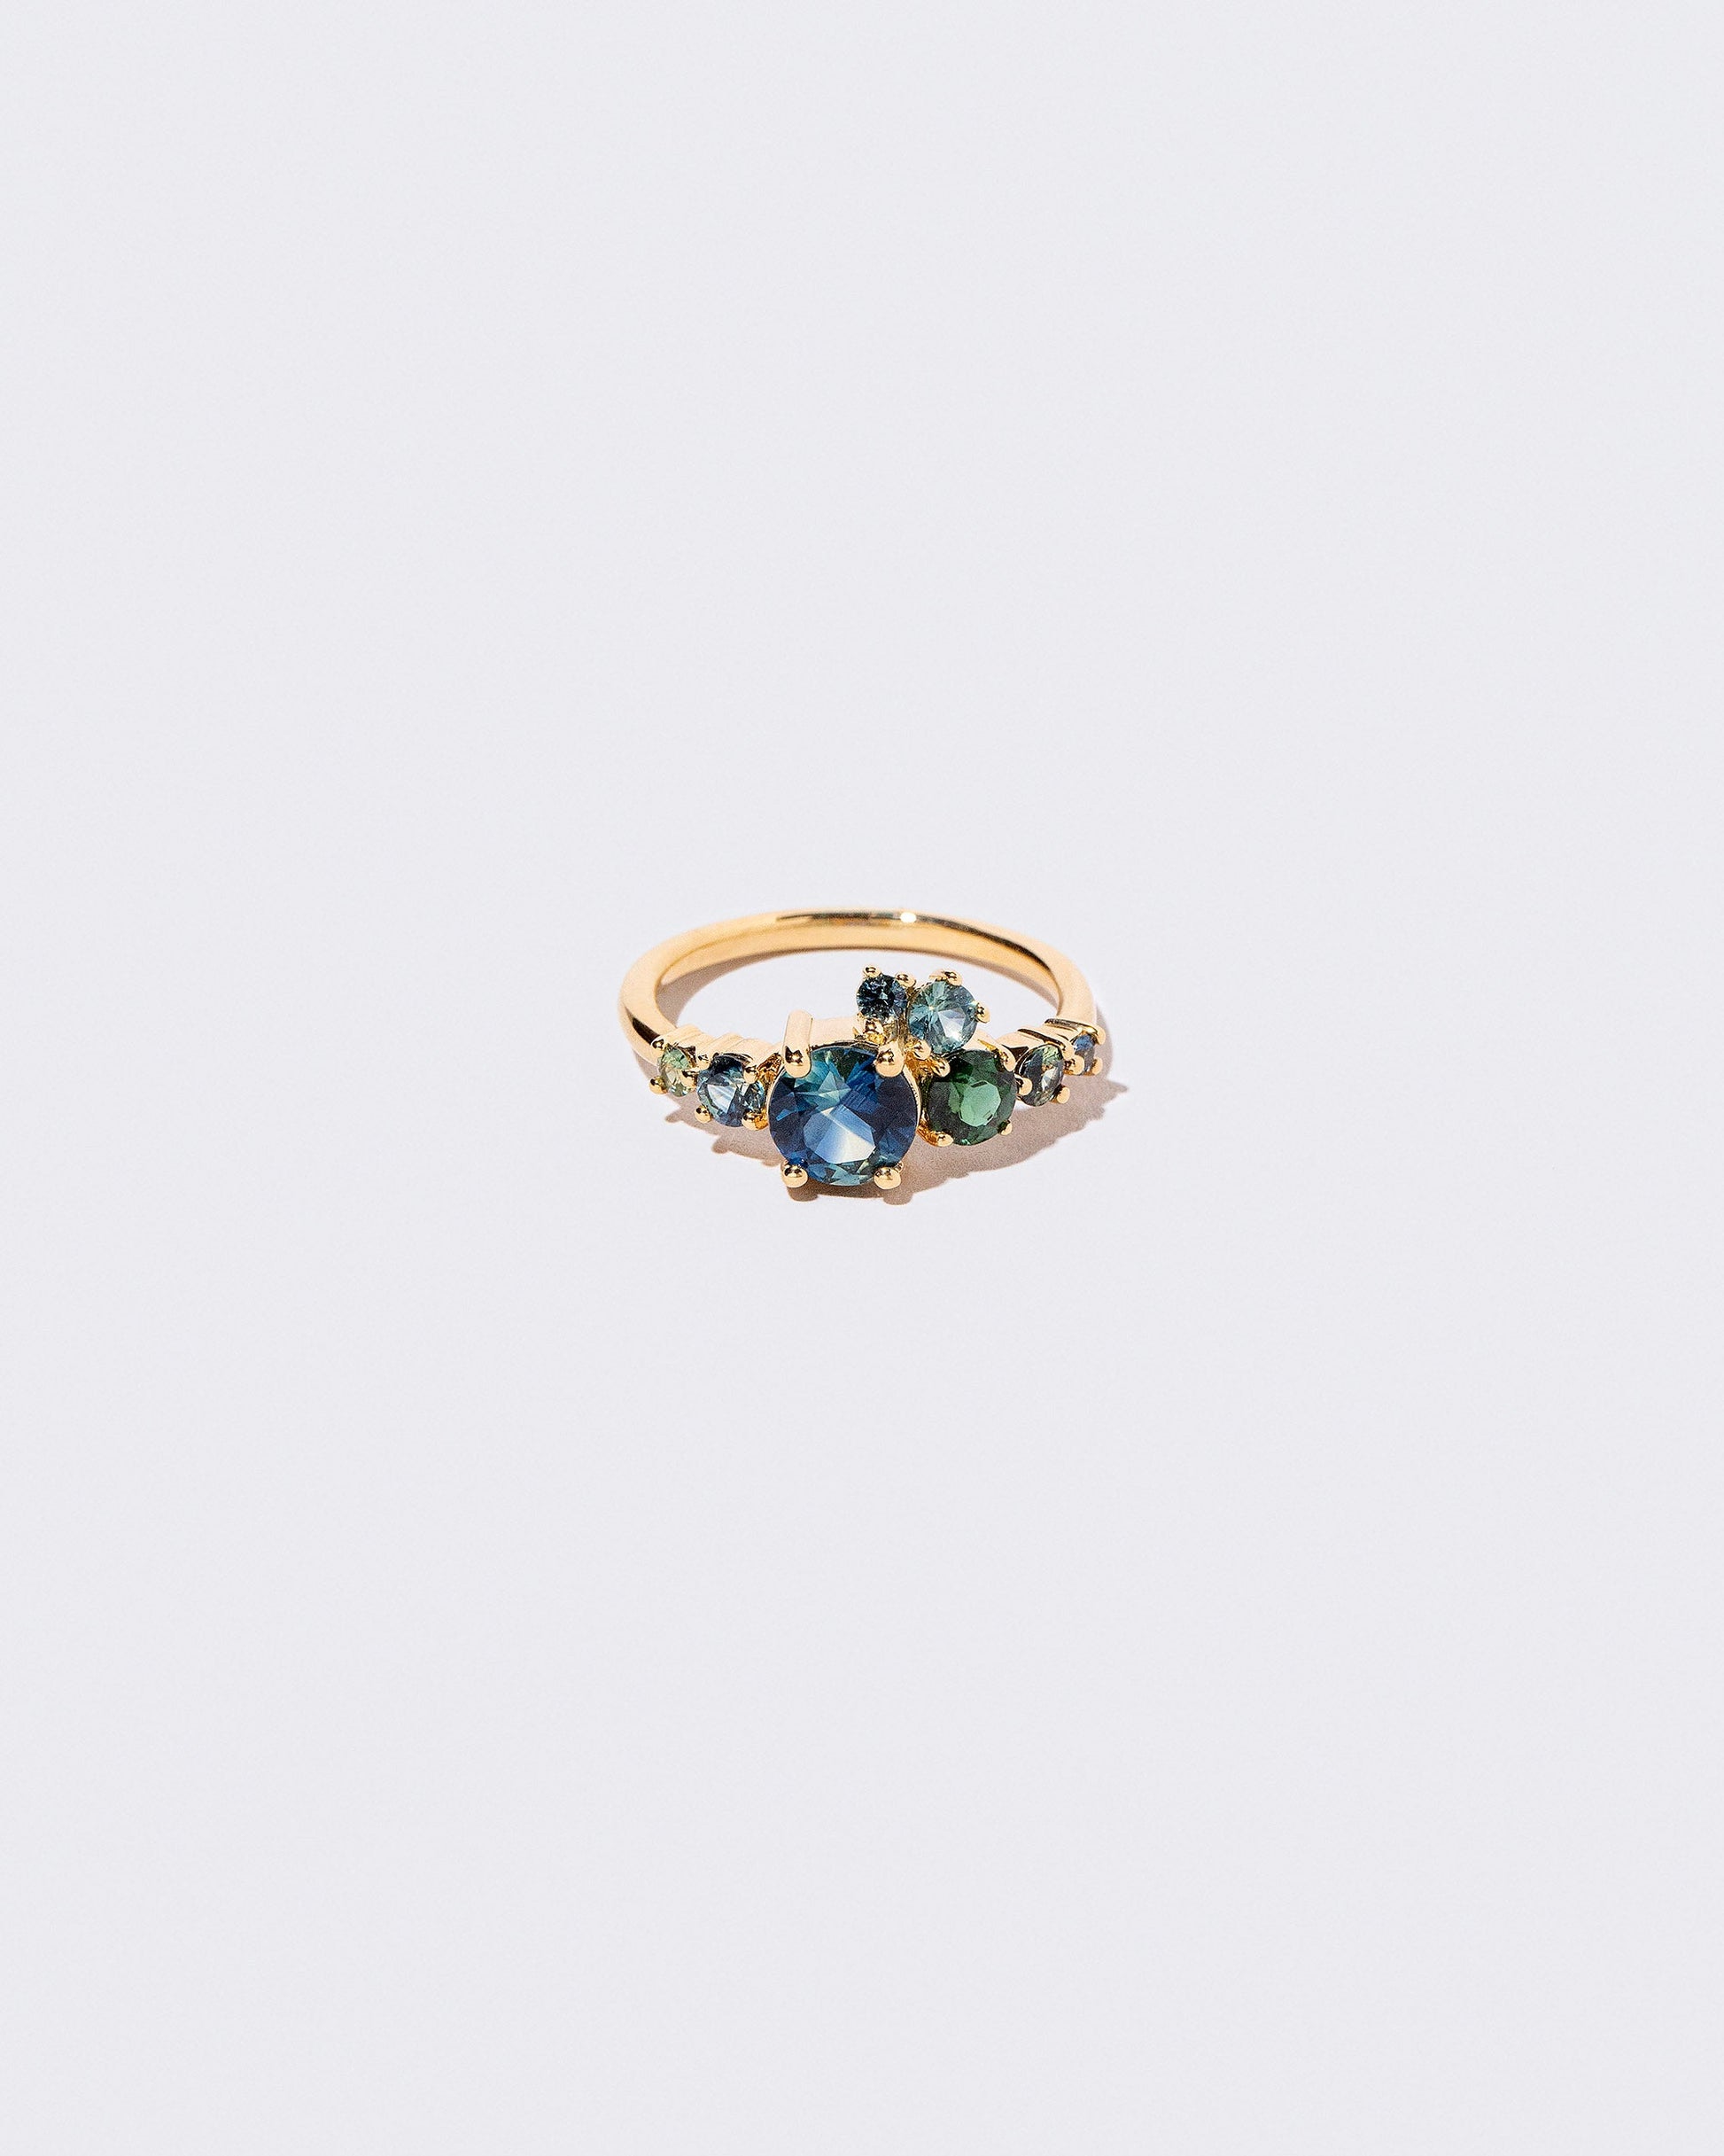  Luna Ring - Bicolor Sapphire on light color background.